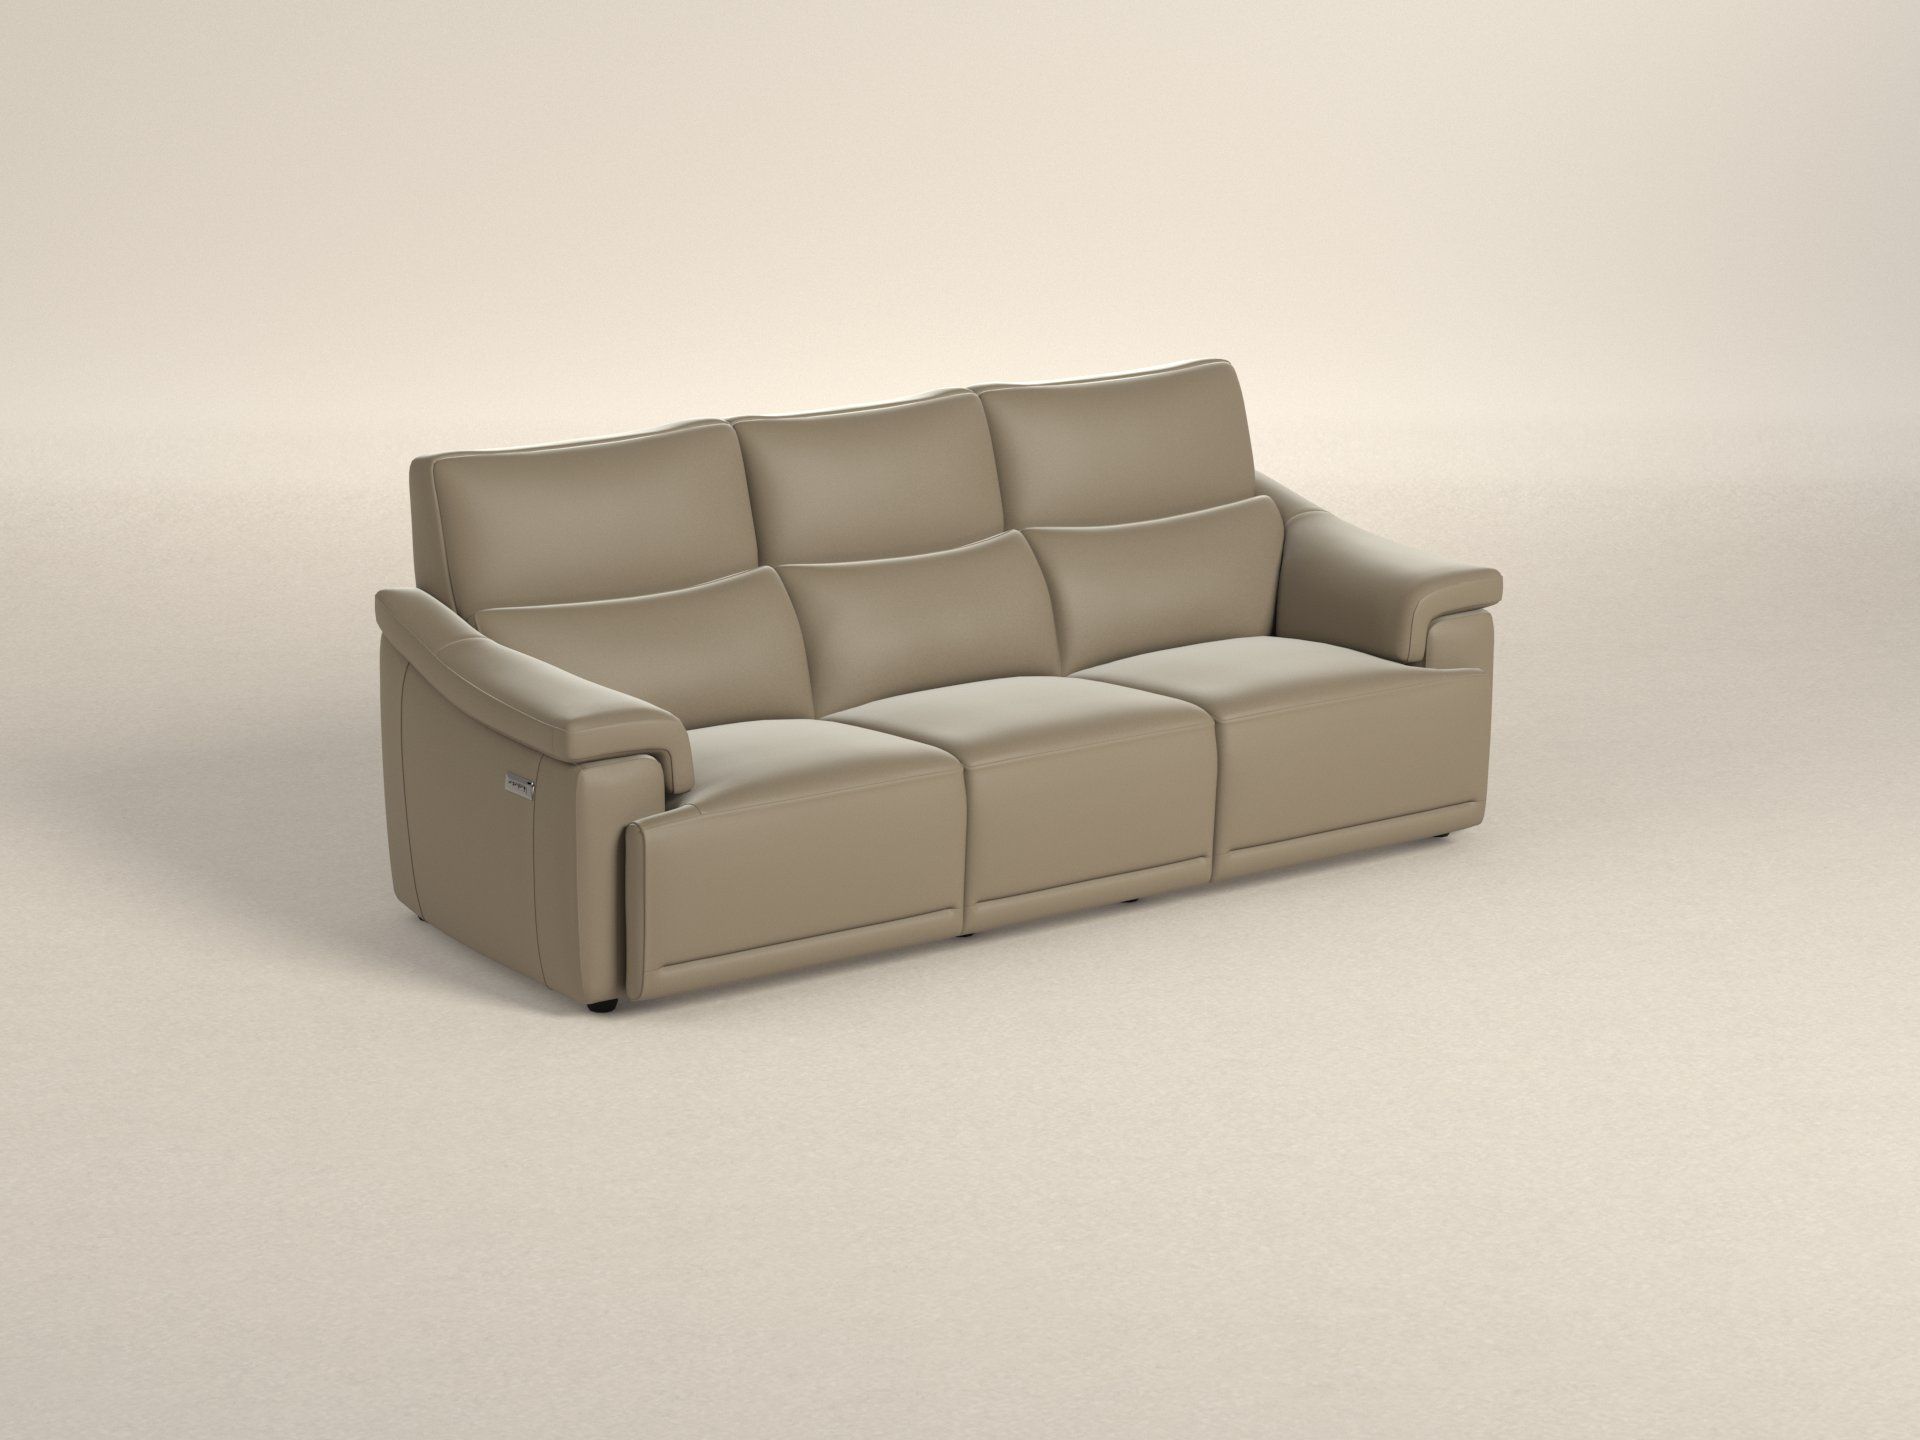 Preset default image - Brama Recliner Three seater sofa - Leather